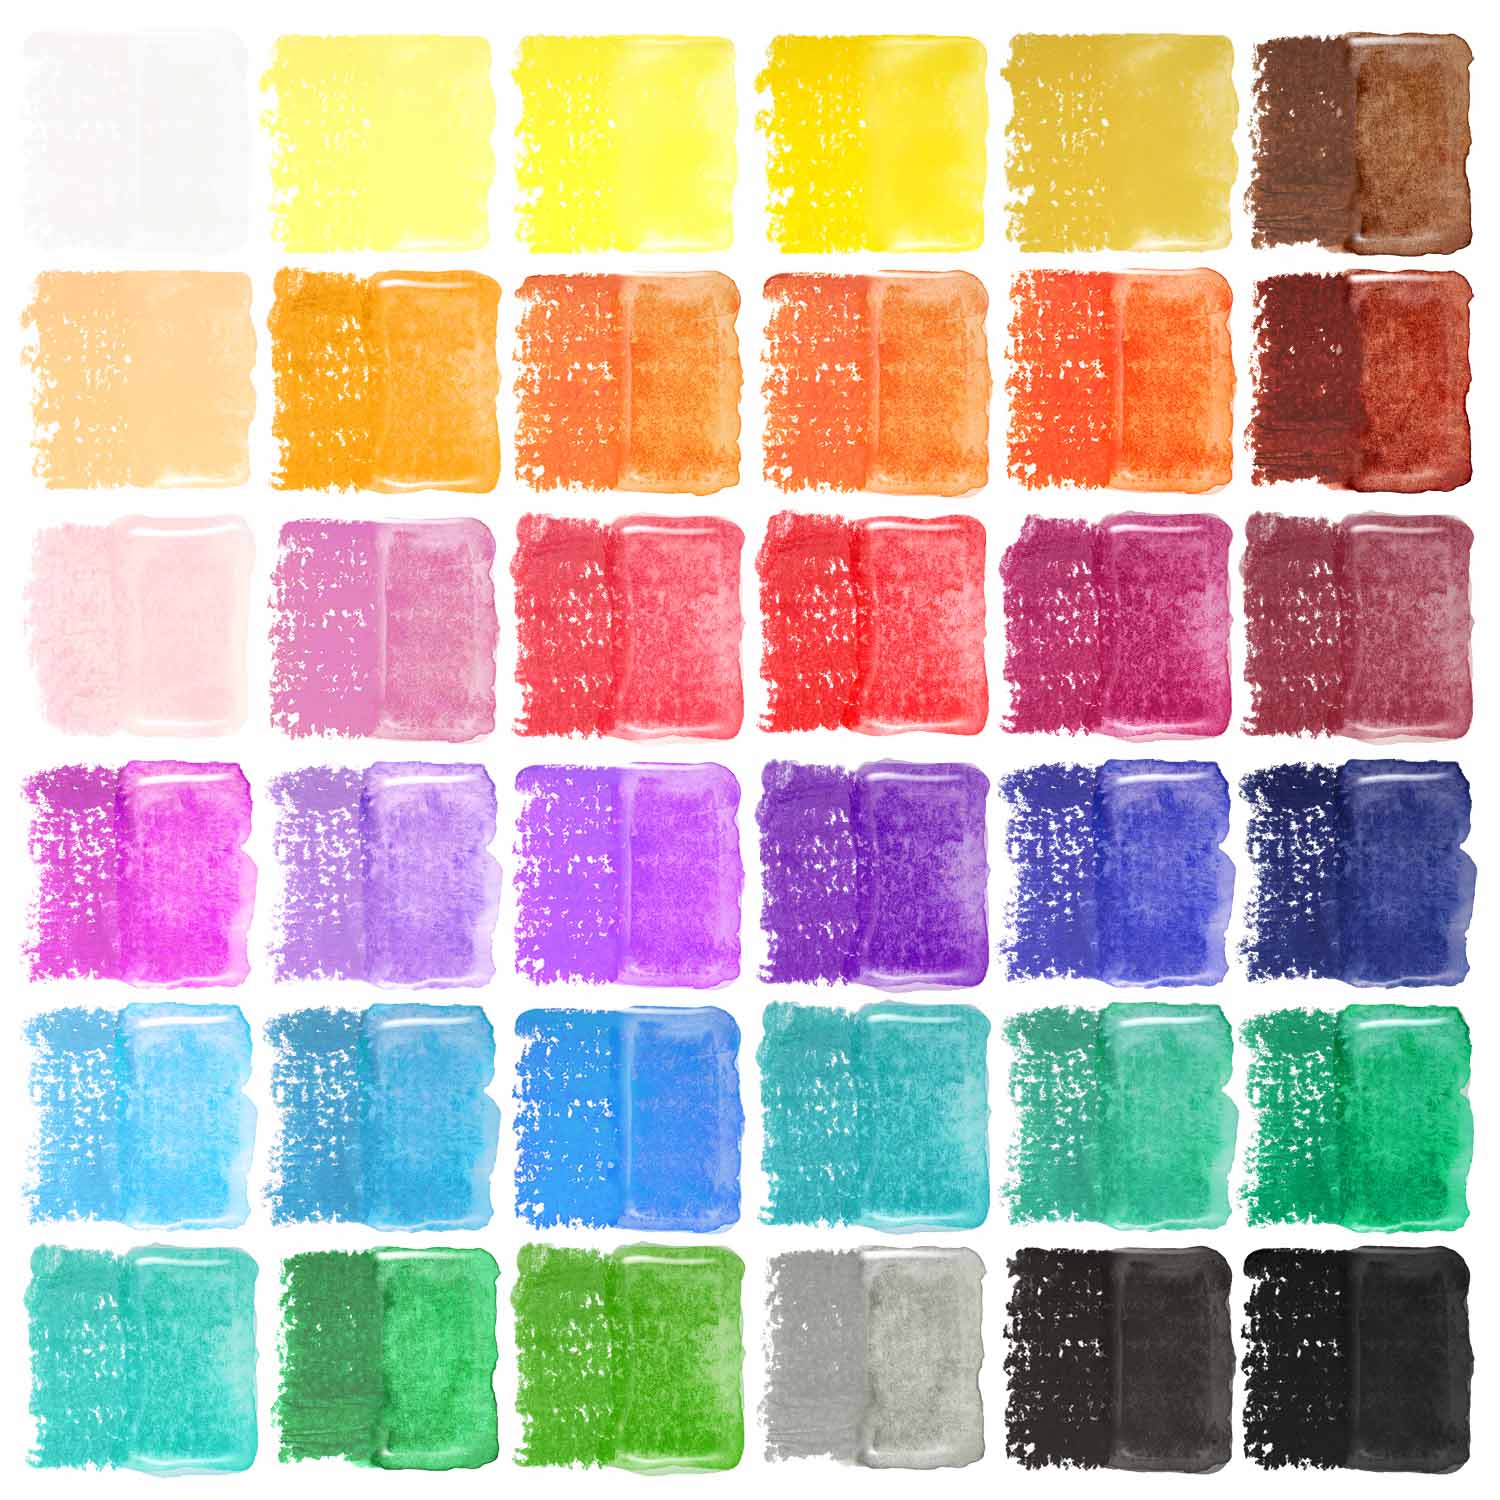 Arteza Kids Toddler Crayons in Bulk, 216 Count, 6 Packs of 36 Colors, Regular size, Vivid Wax Crayon Pencils, Art Supplies for K